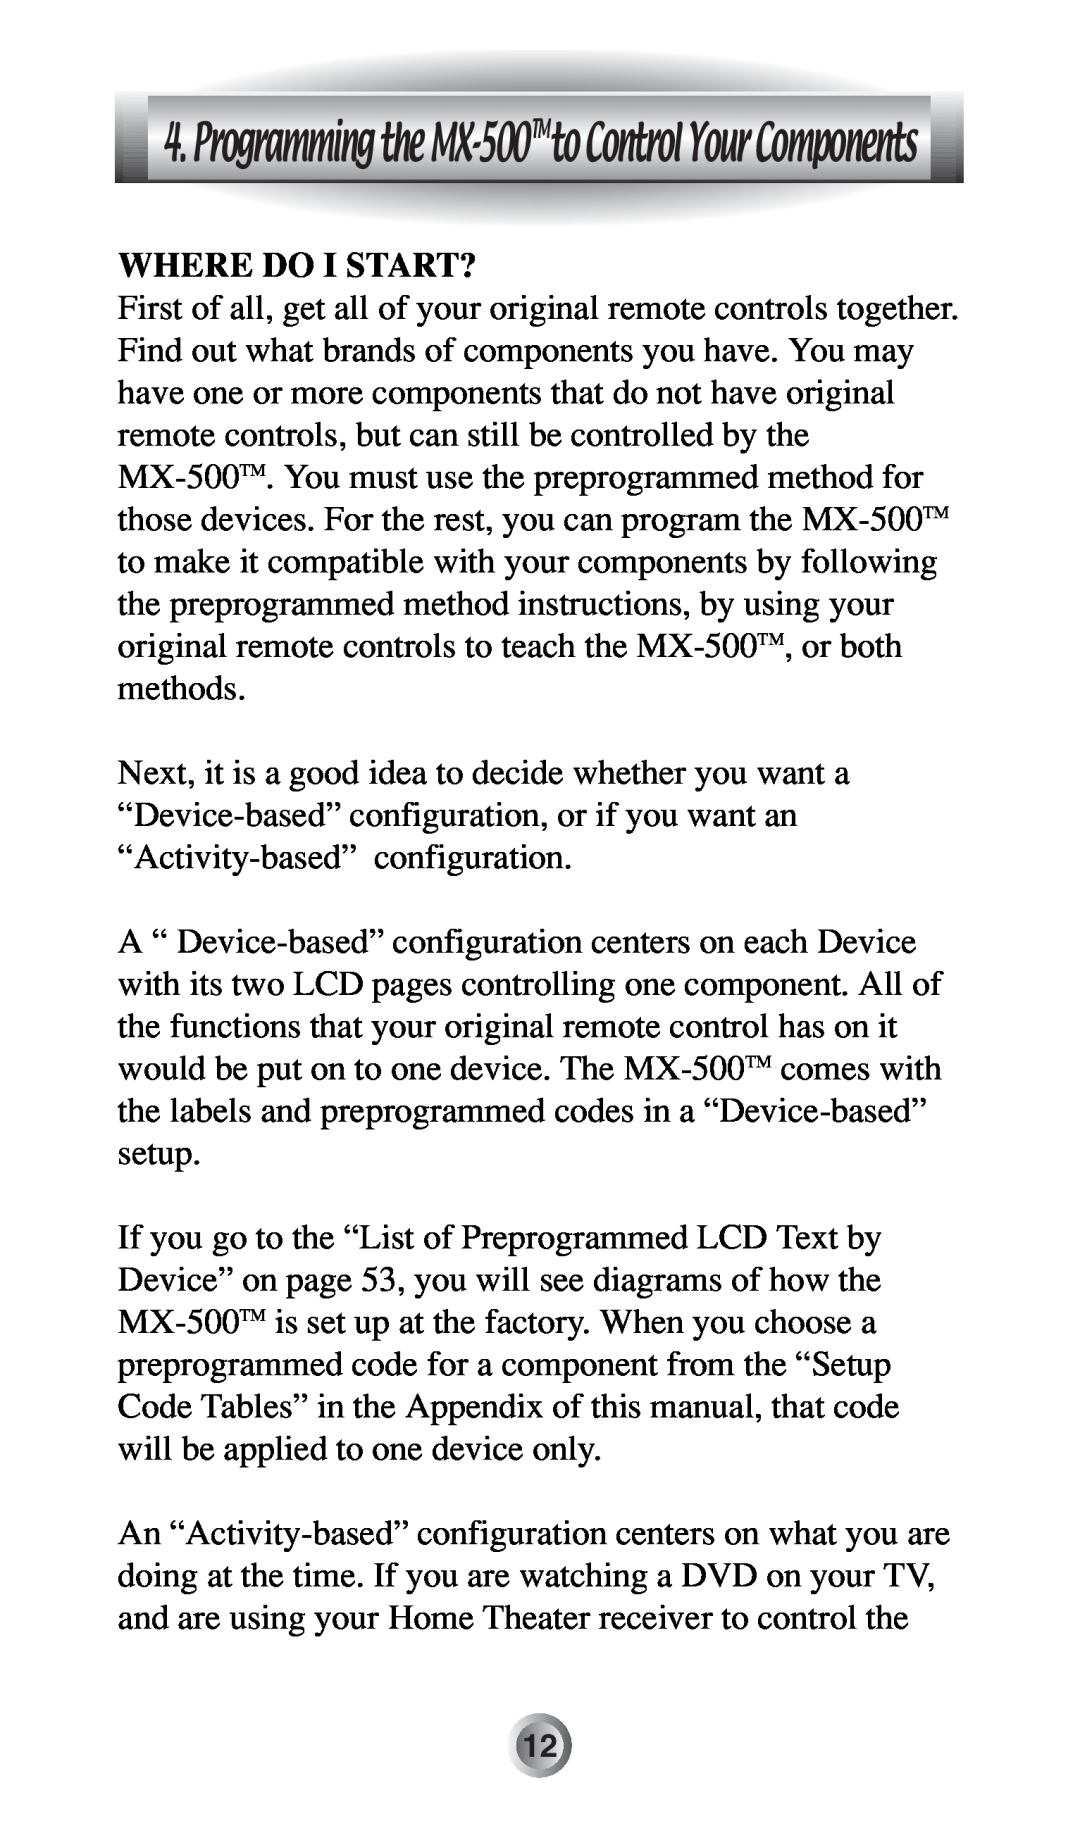 Radio Shack manual ProgrammingtheMX-500TMtoControlYourComponents, Where Do I Start? 